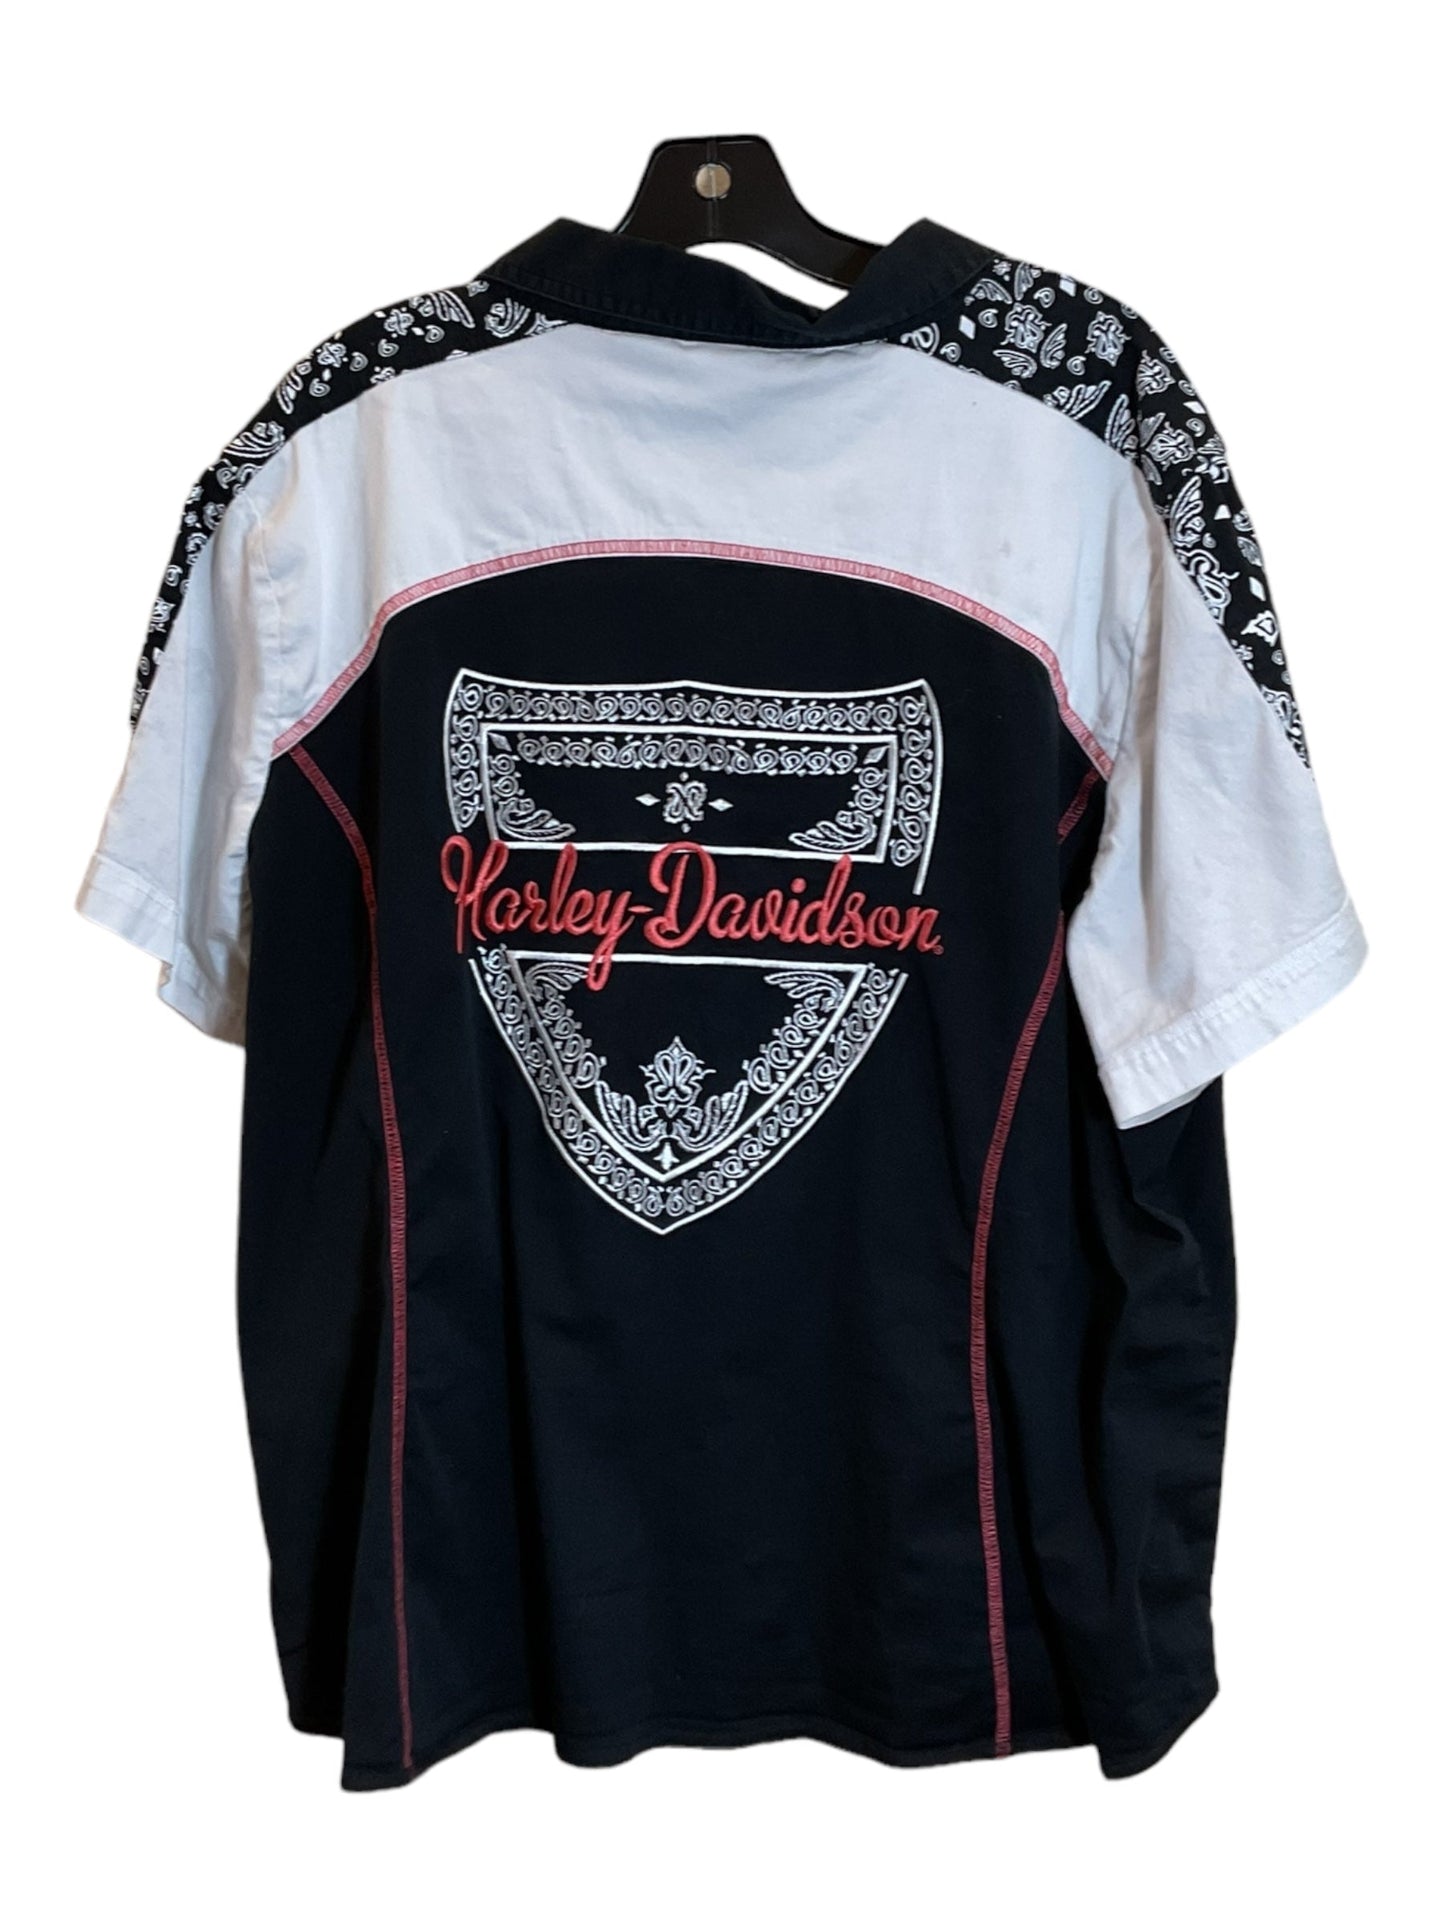 Black & White Blouse Short Sleeve Harley Davidson, Size 2x